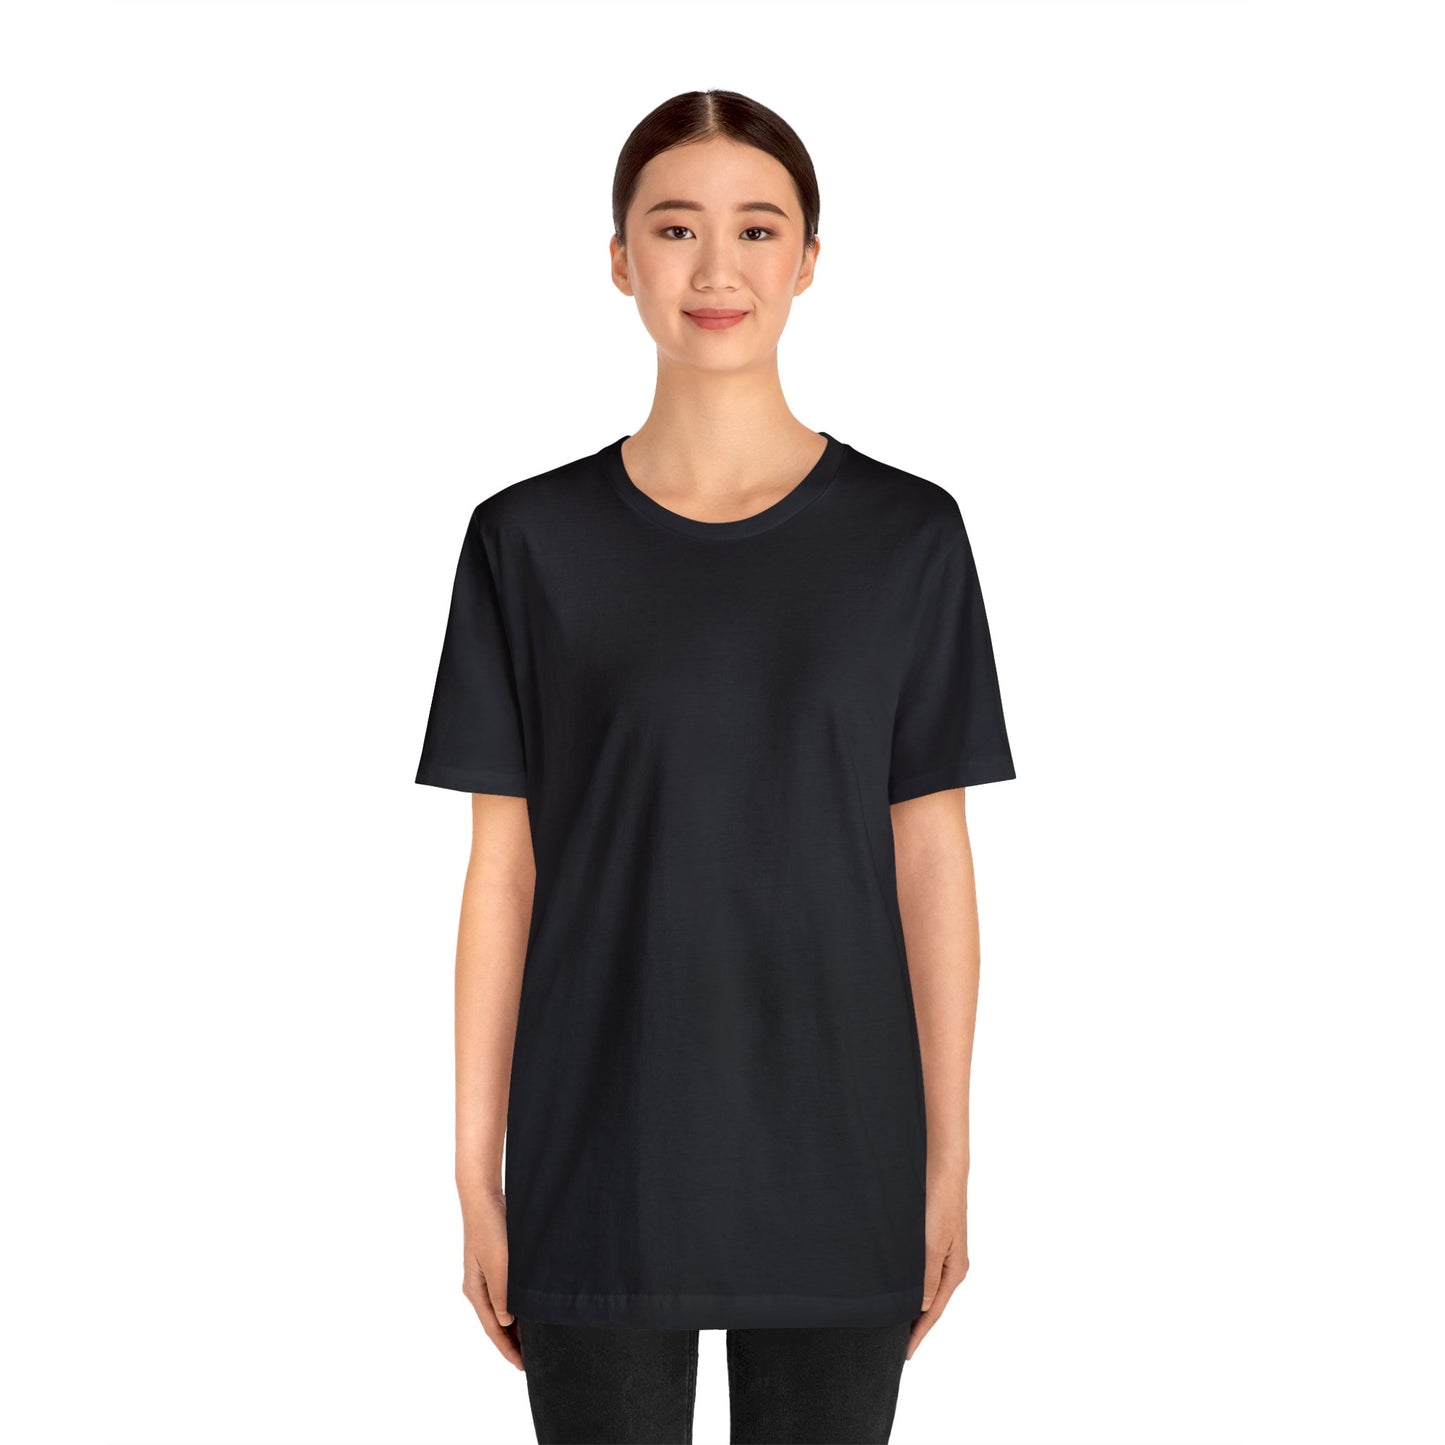 Unisex Jersey Short Sleeve Vintage Black T Shirt